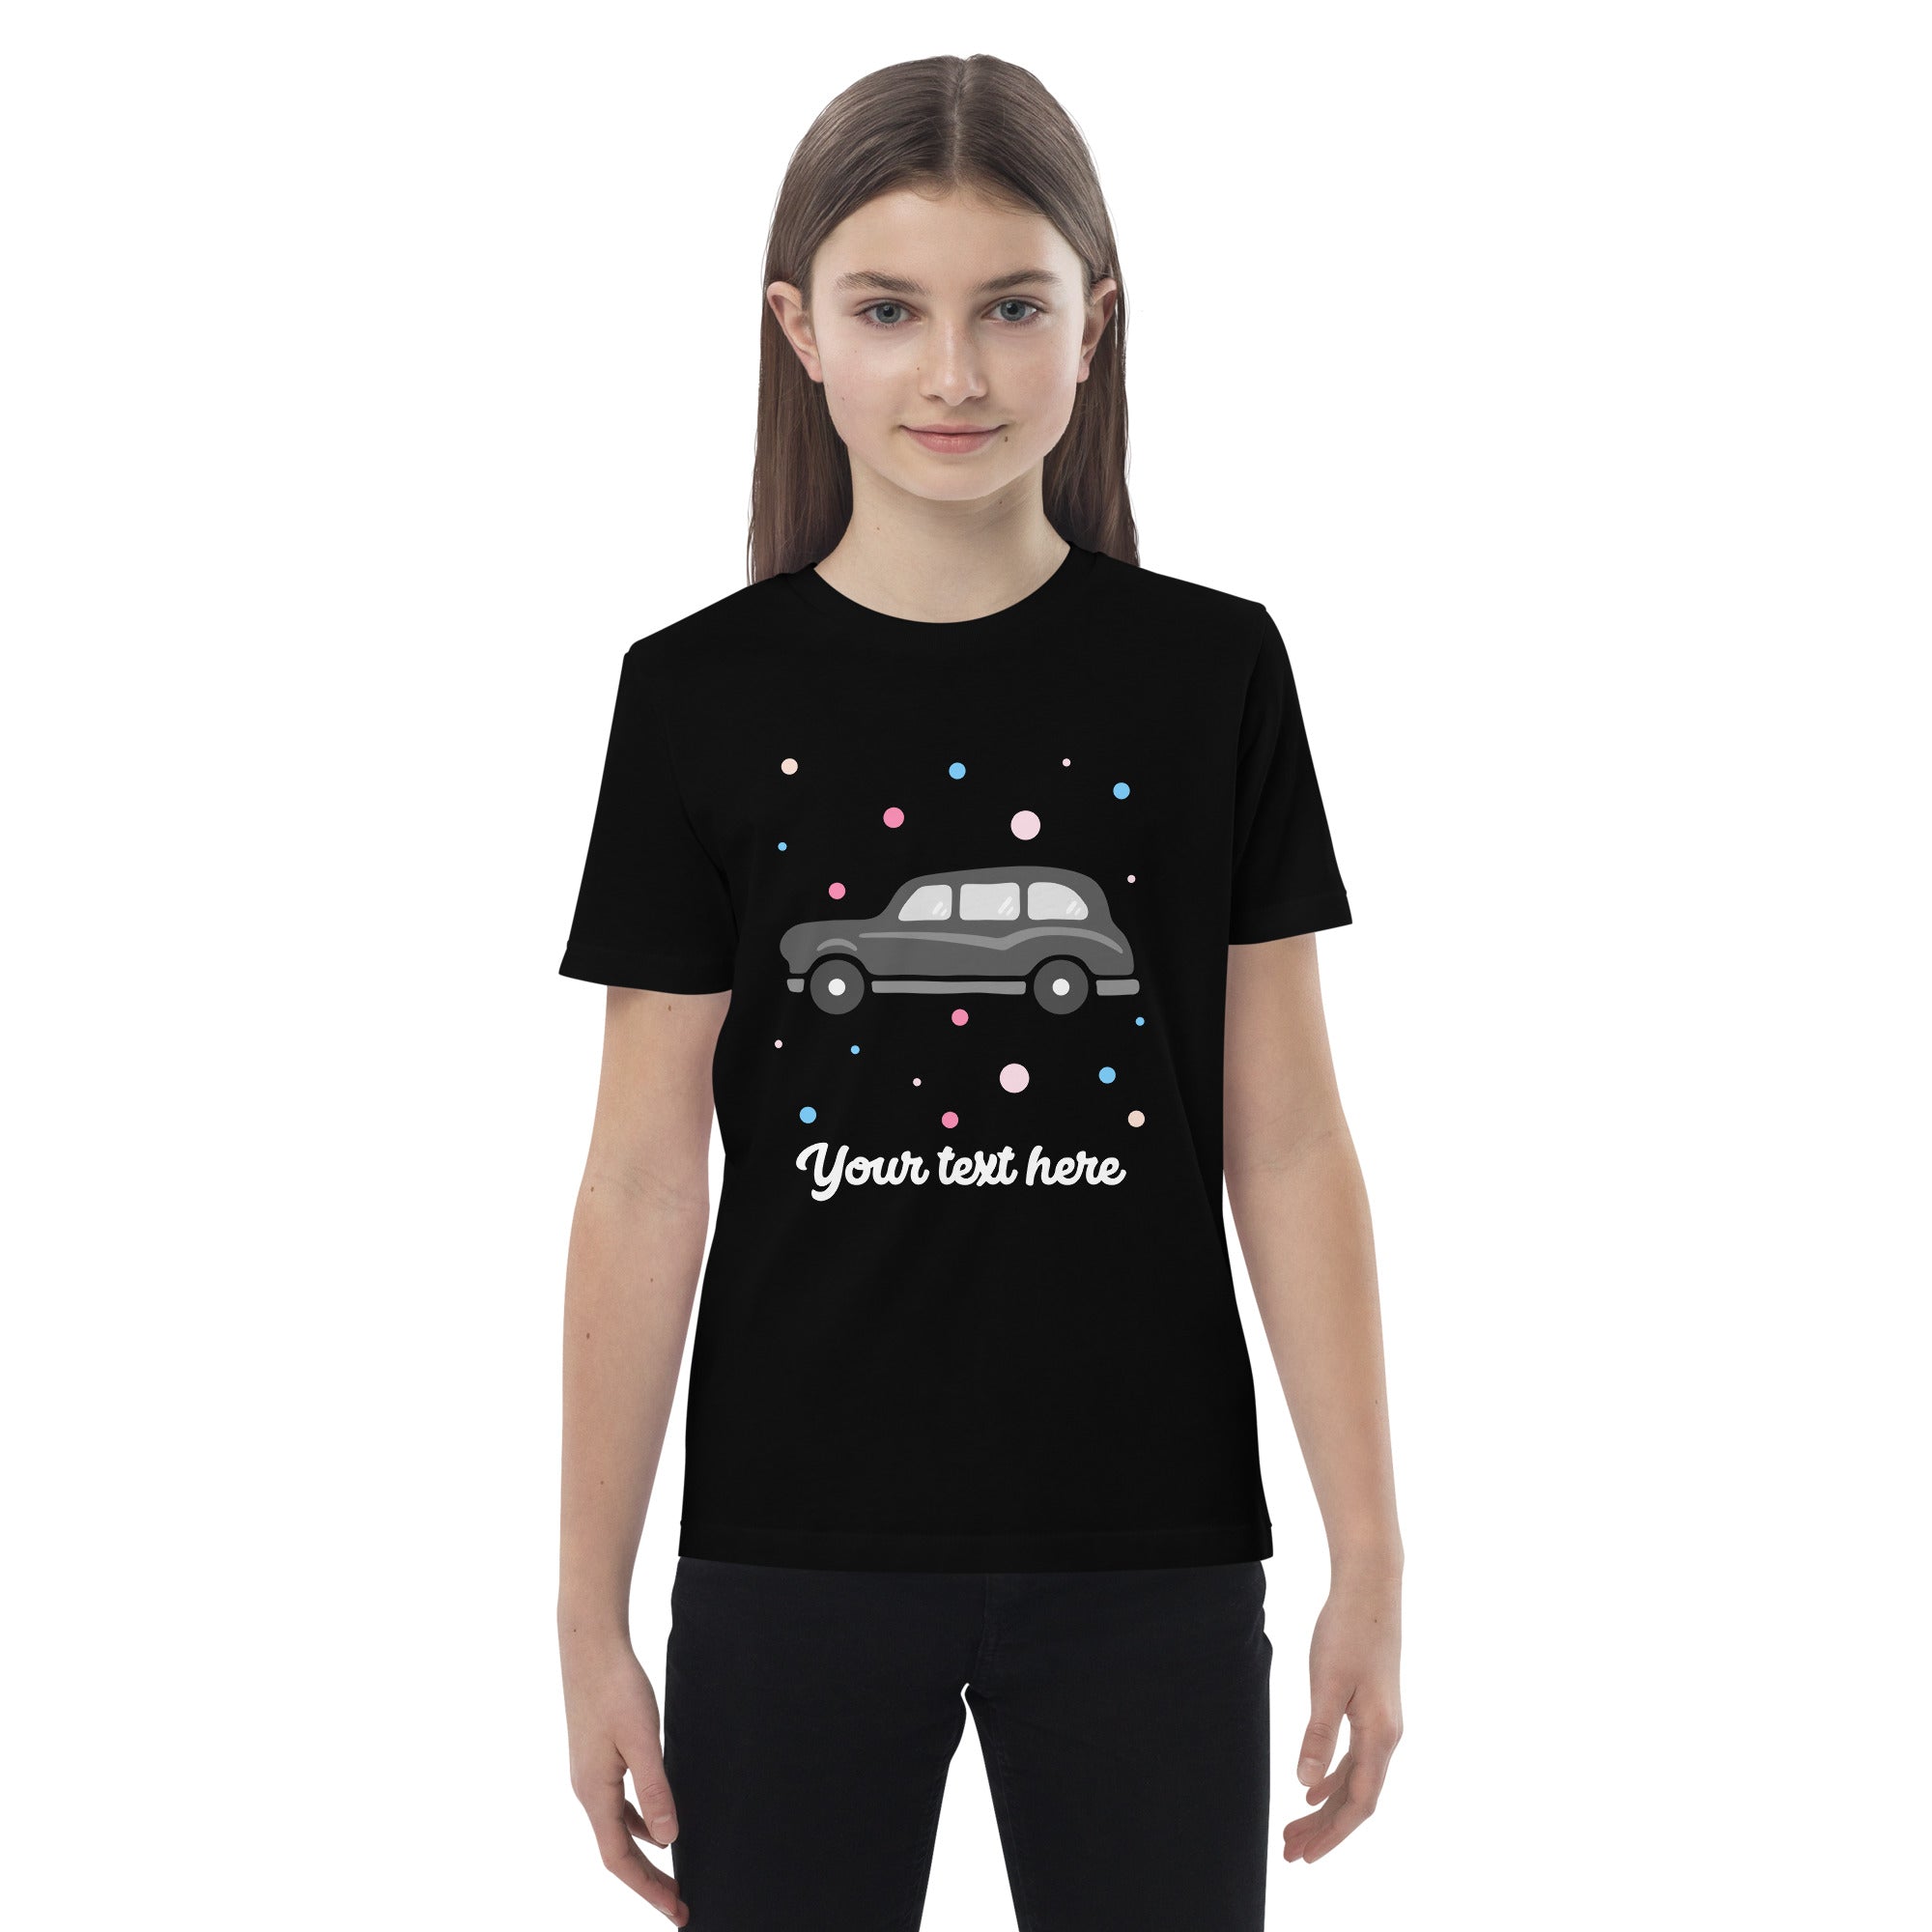 Personalised Custom Text - Organic Cotton Kids T-Shirt - London Doodles - Black Taxi - Black 3